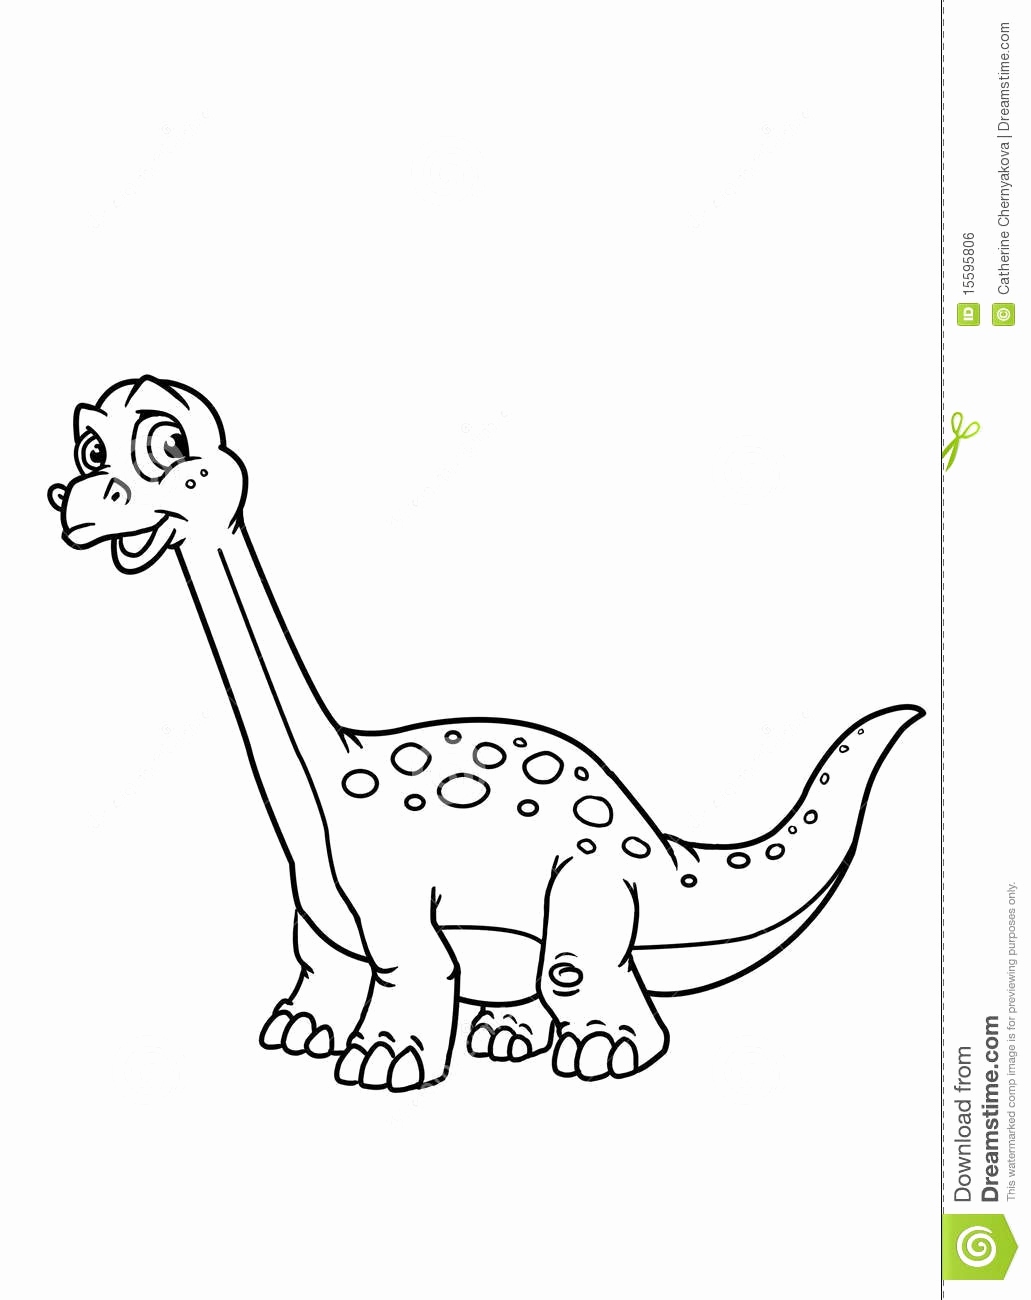 Brachiosaurus Coloring Page at GetColorings.com | Free printable